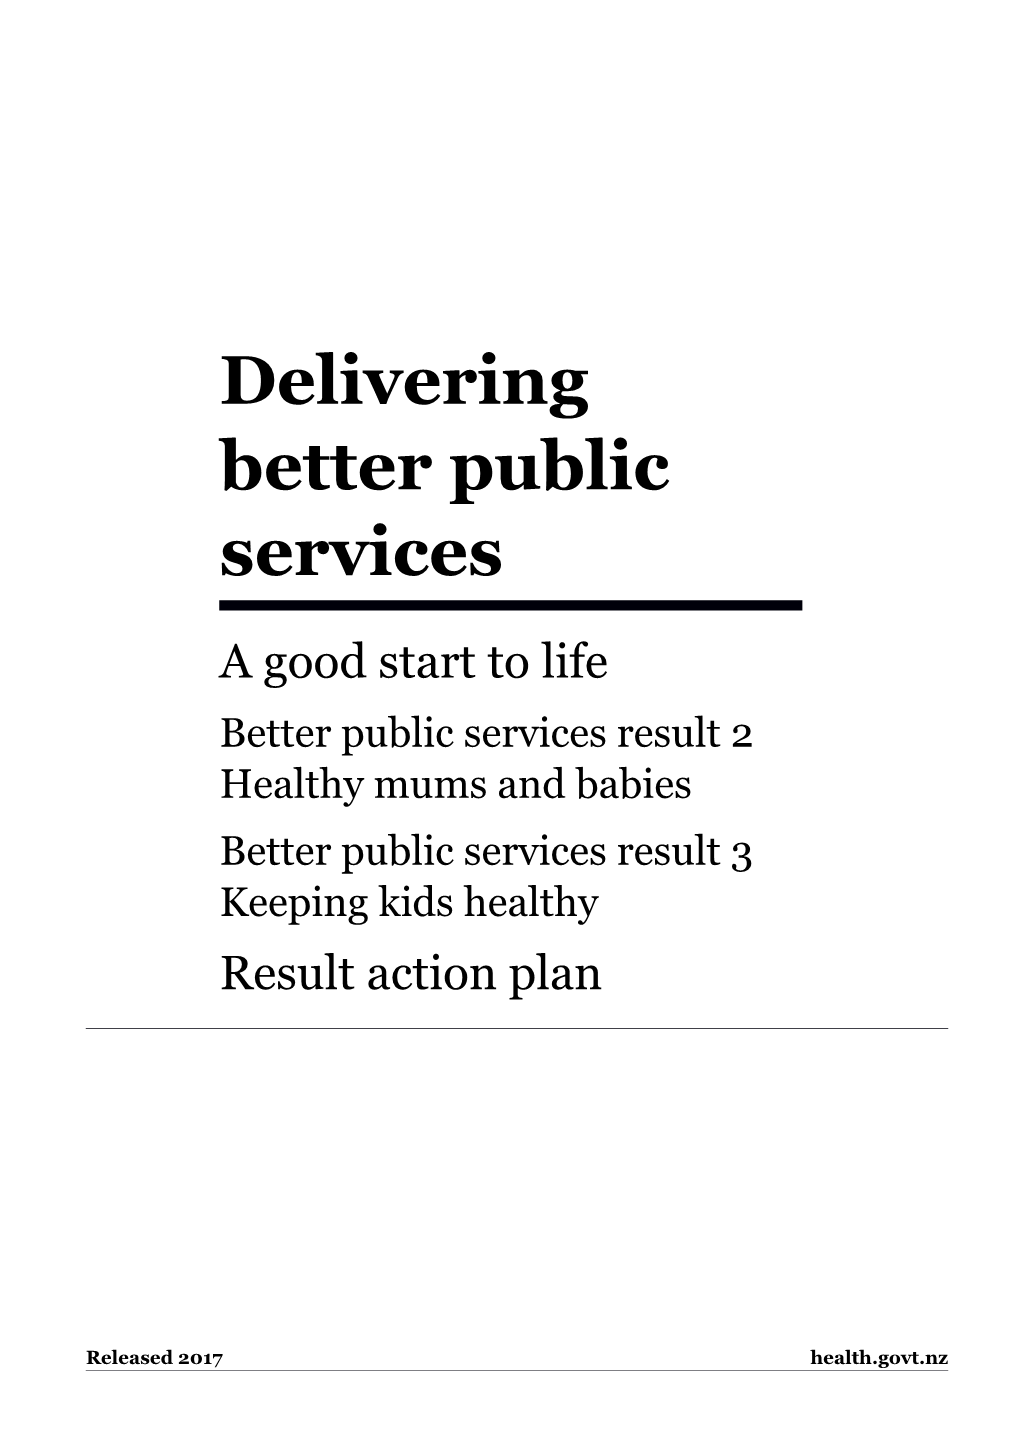 Delivering Better Public Services